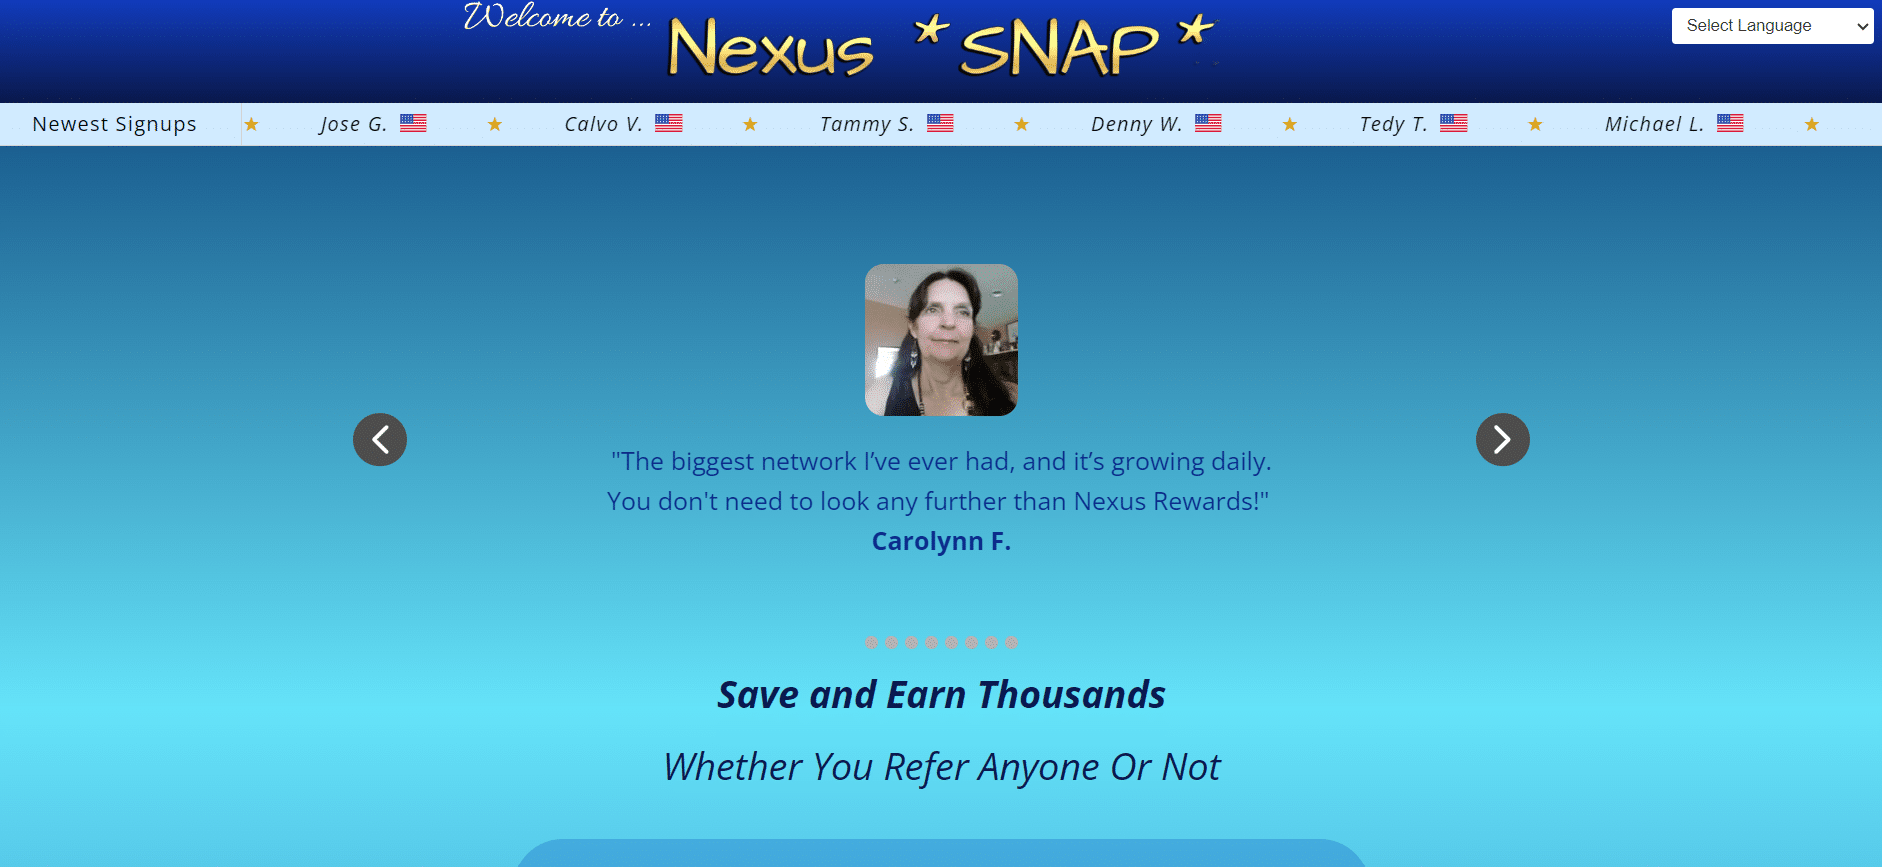 nexus snap reviews